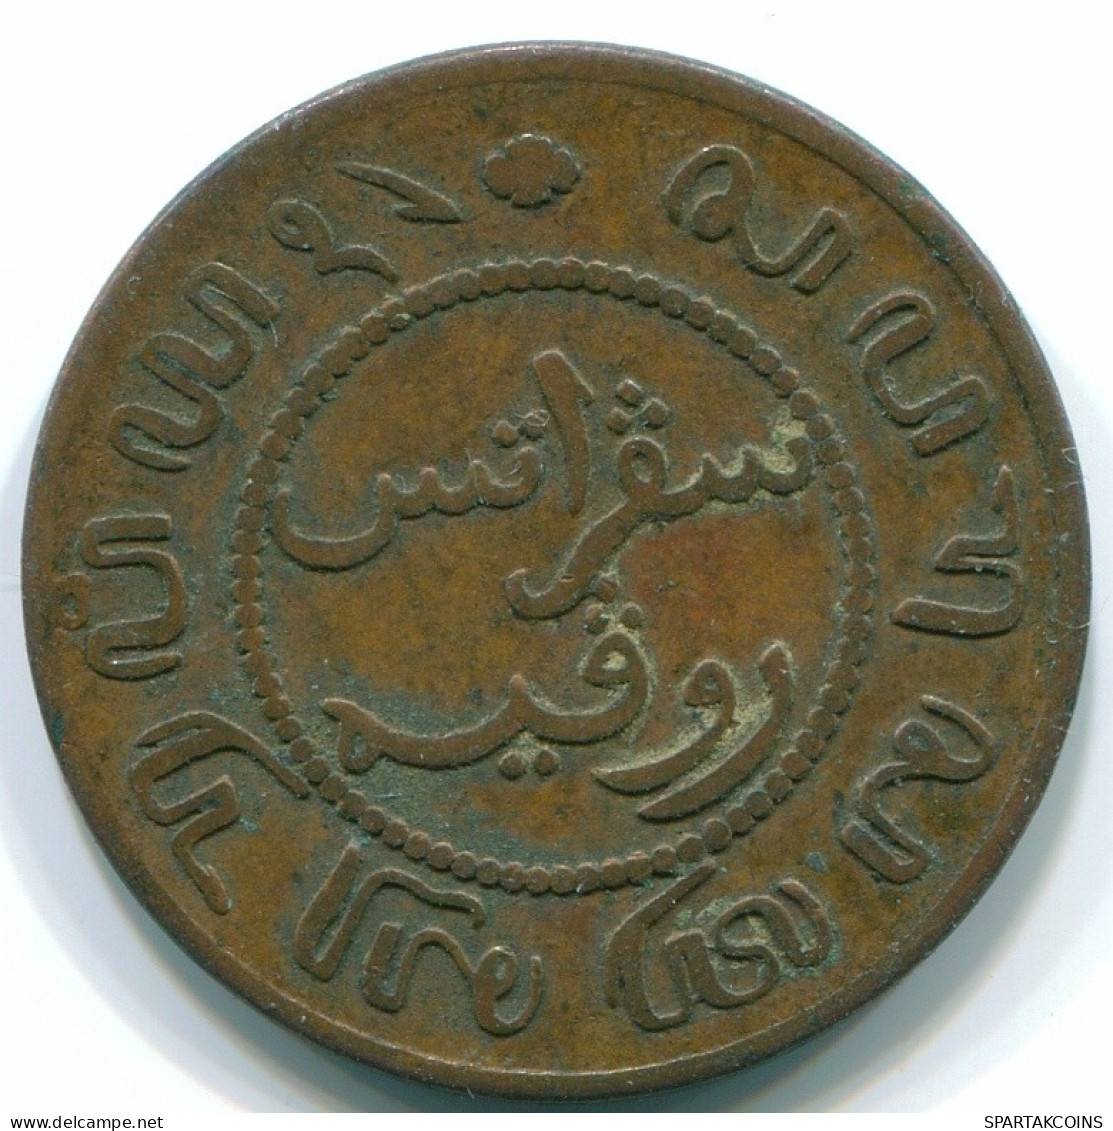 1 CENT 1857 NETHERLANDS EAST INDIES INDONESIA Copper Colonial Coin #S10033.U.A - Niederländisch-Indien